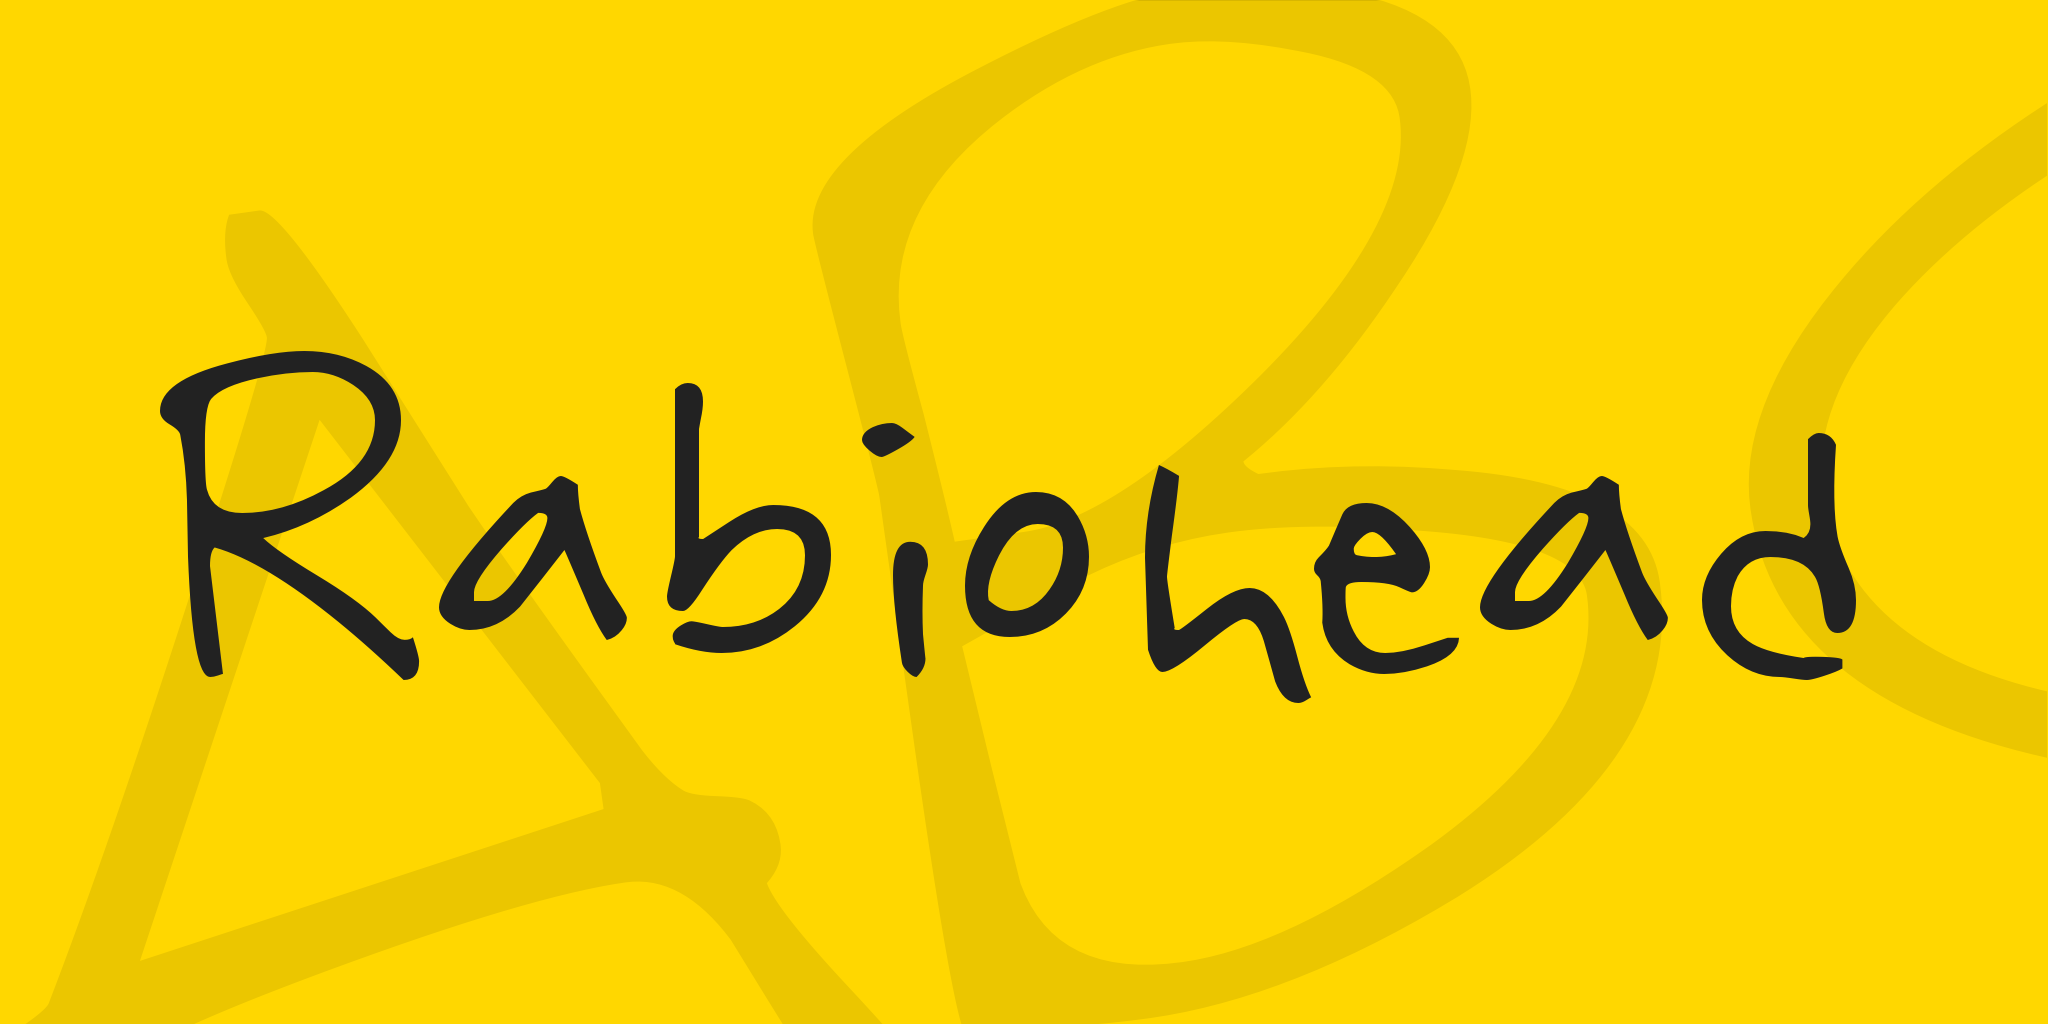 Rabiohead